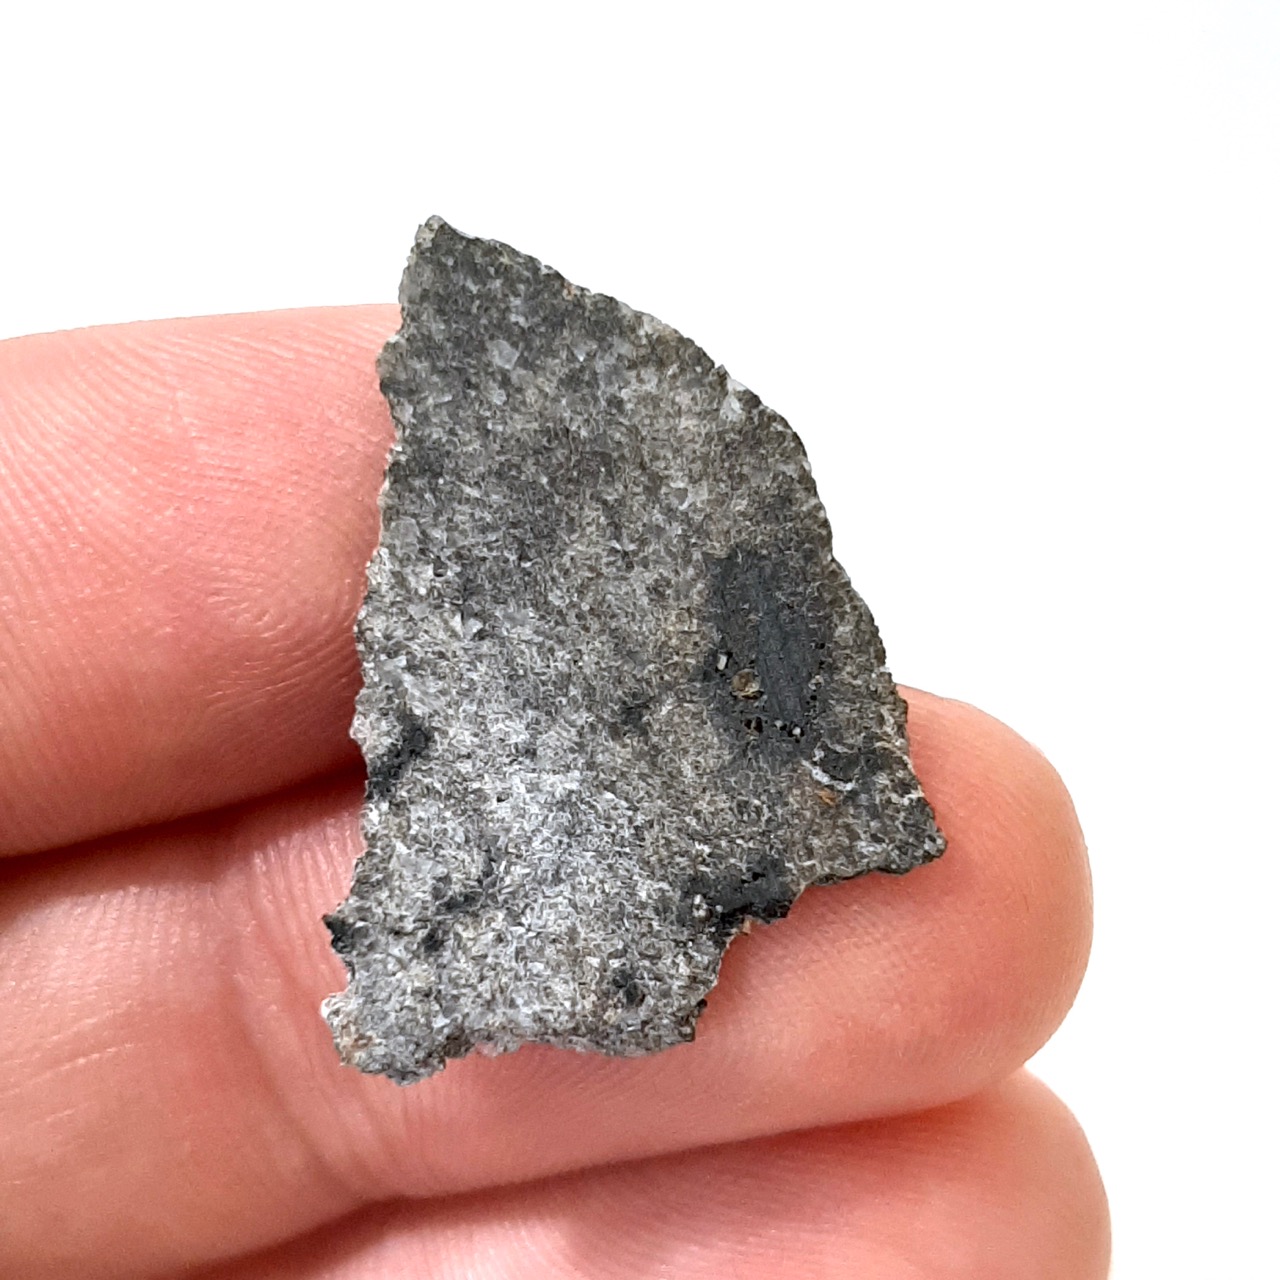 Martian meteorite. NWA 13190. Rock from Mars.